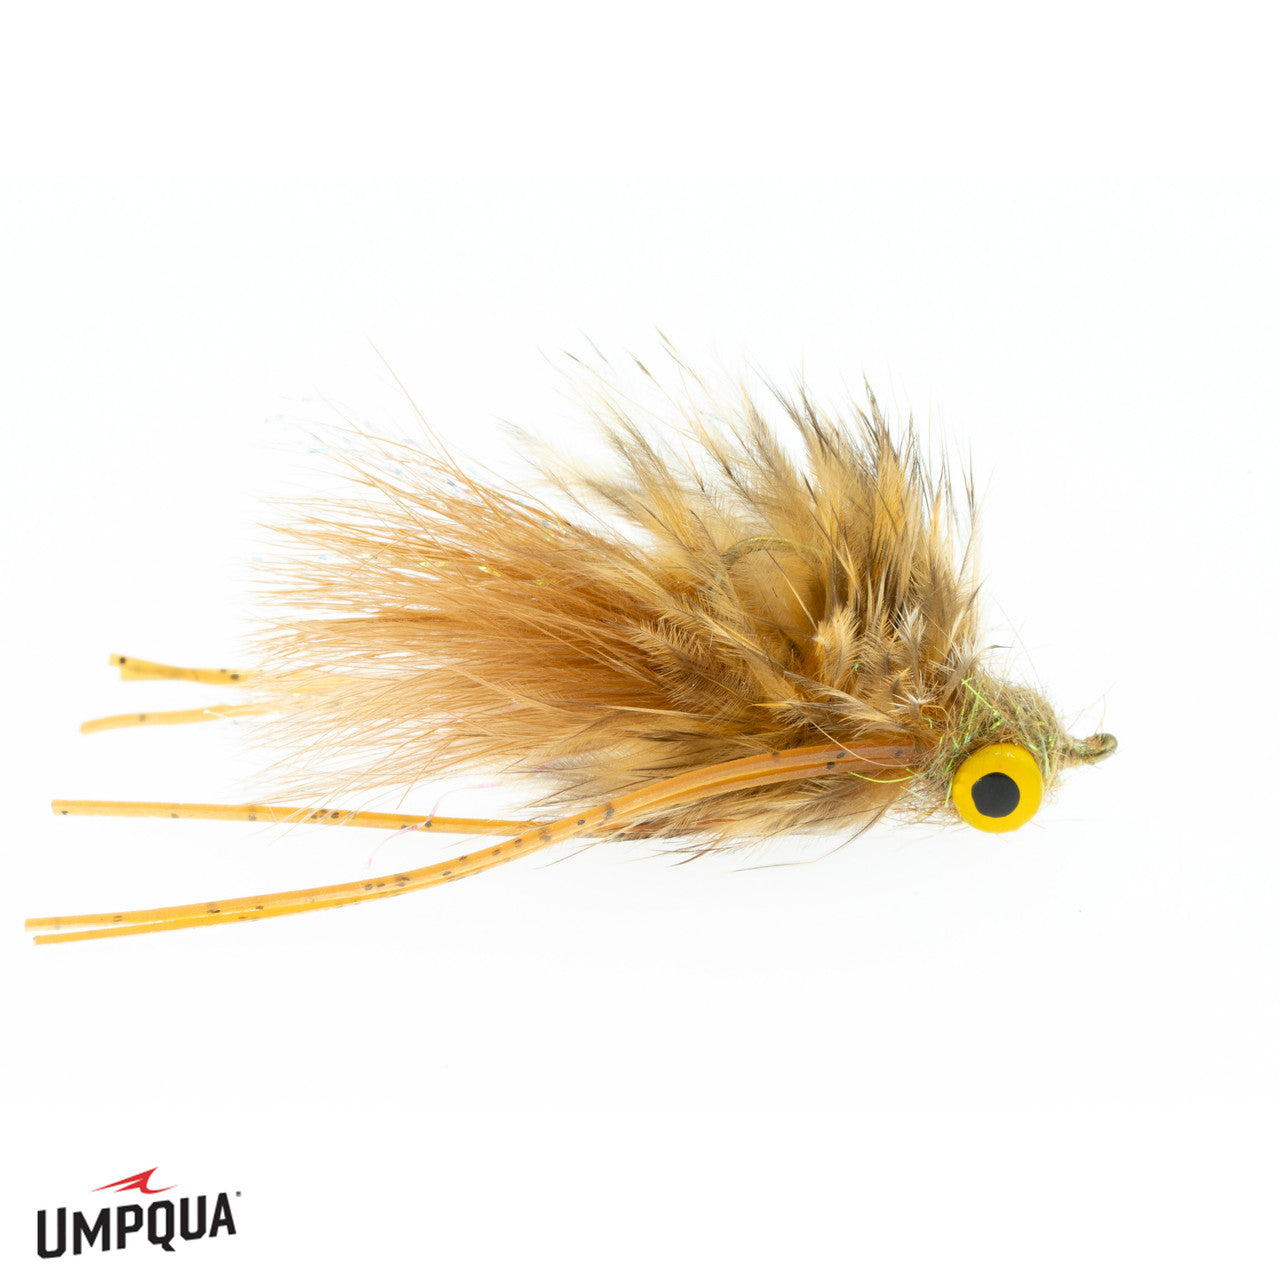 Umpqua - Motor City Anglers